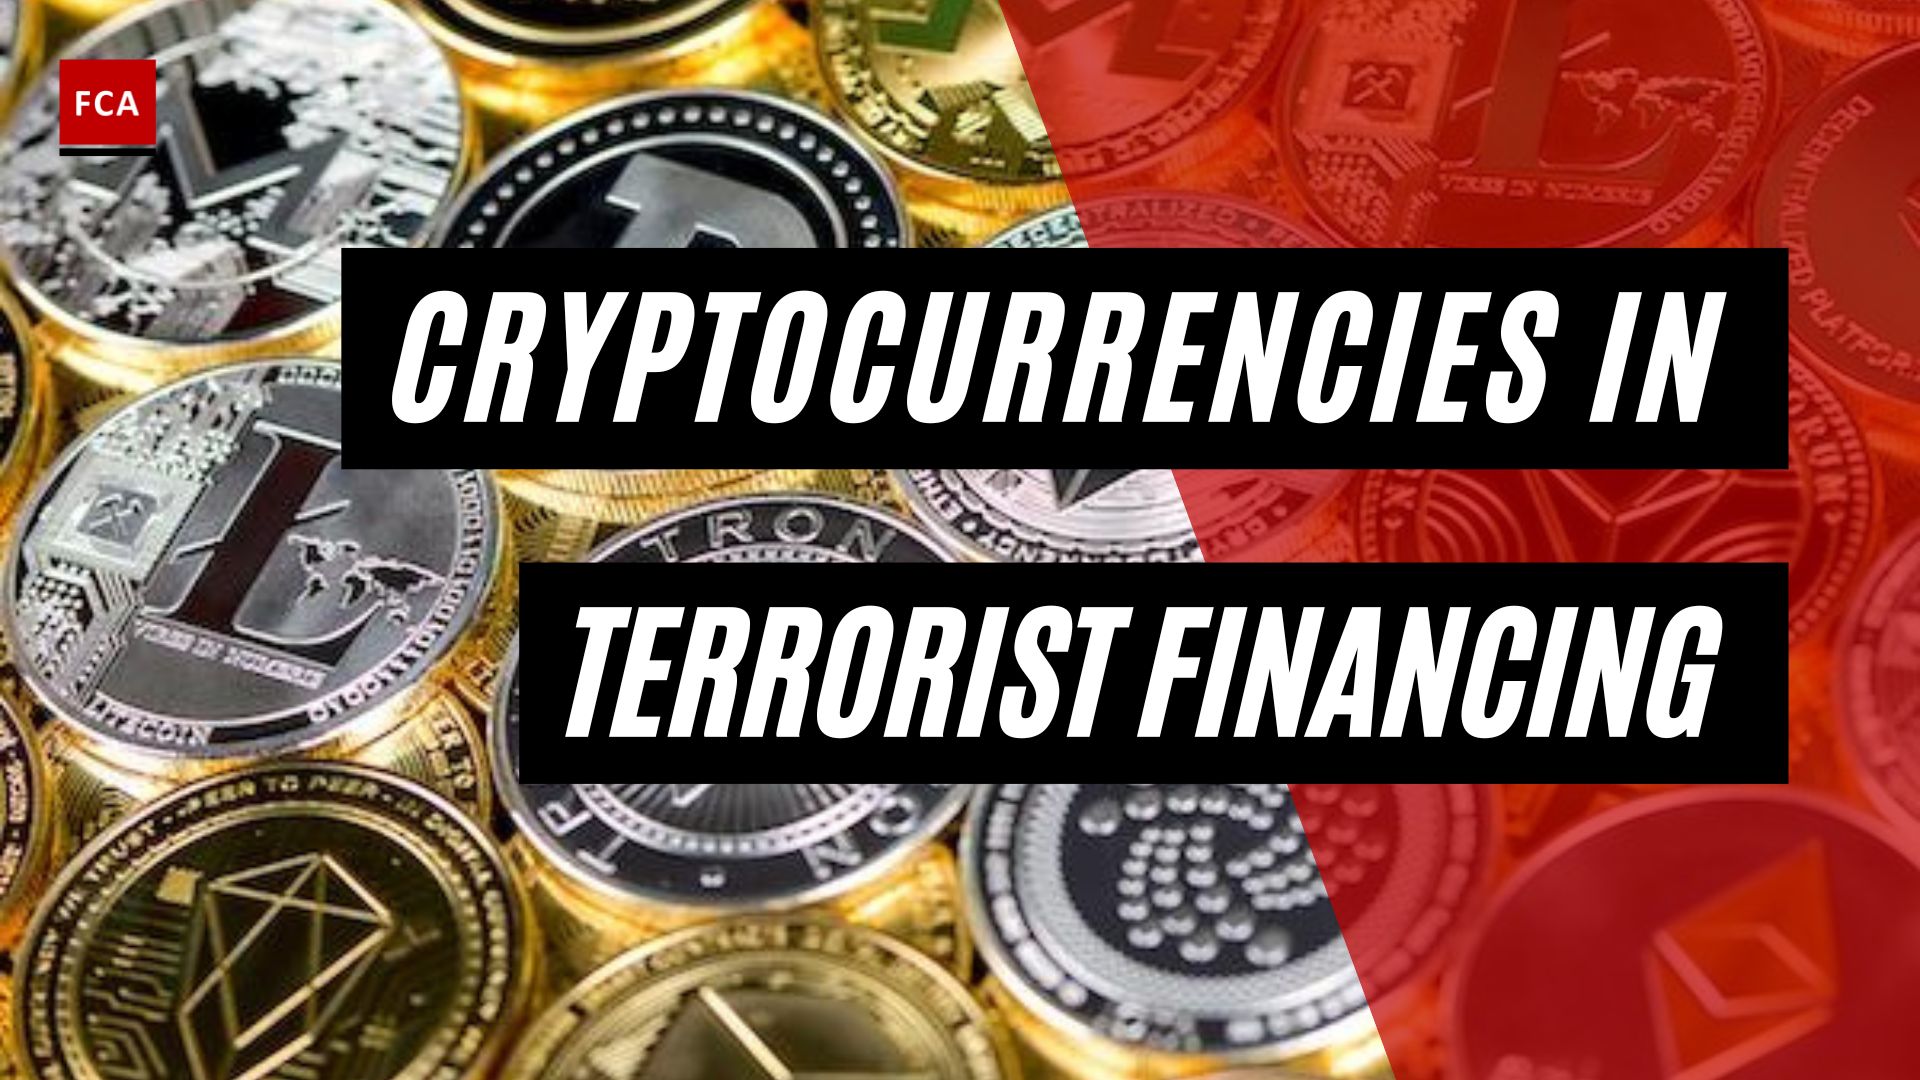 Cryptocurrencies In Terrorist Financing